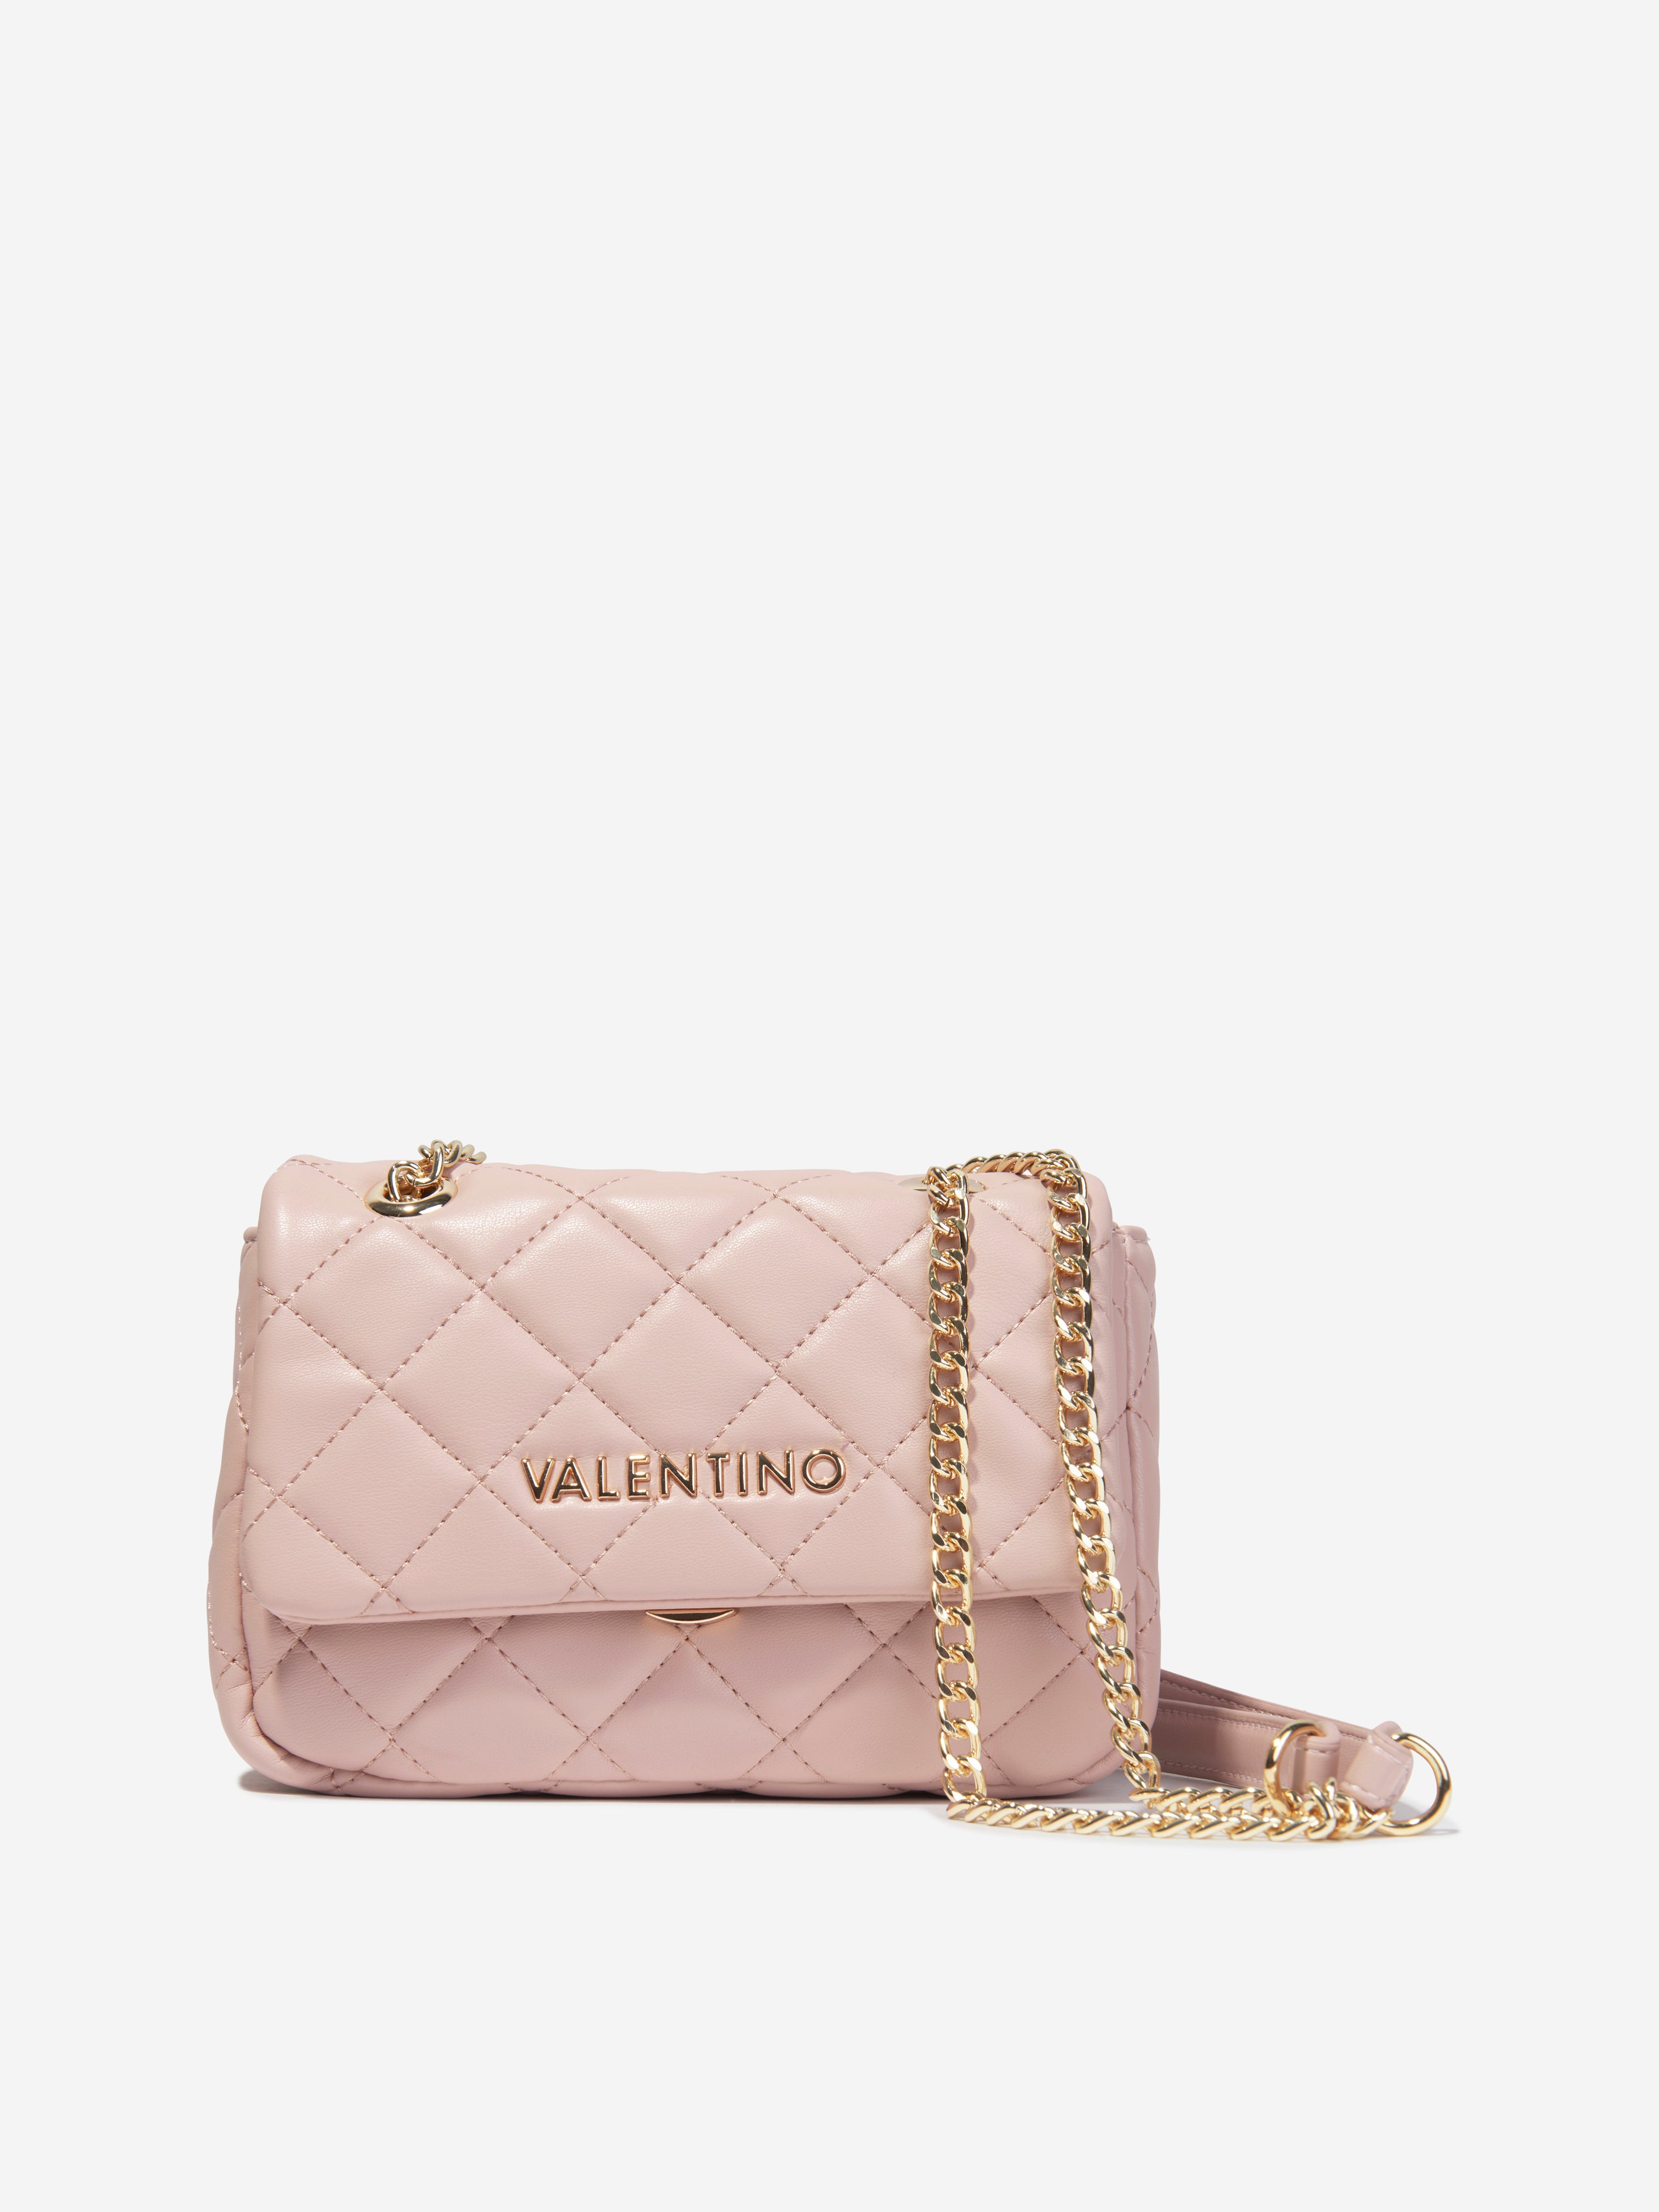 Valentino Garavani Girls Ocarina Flap Bag